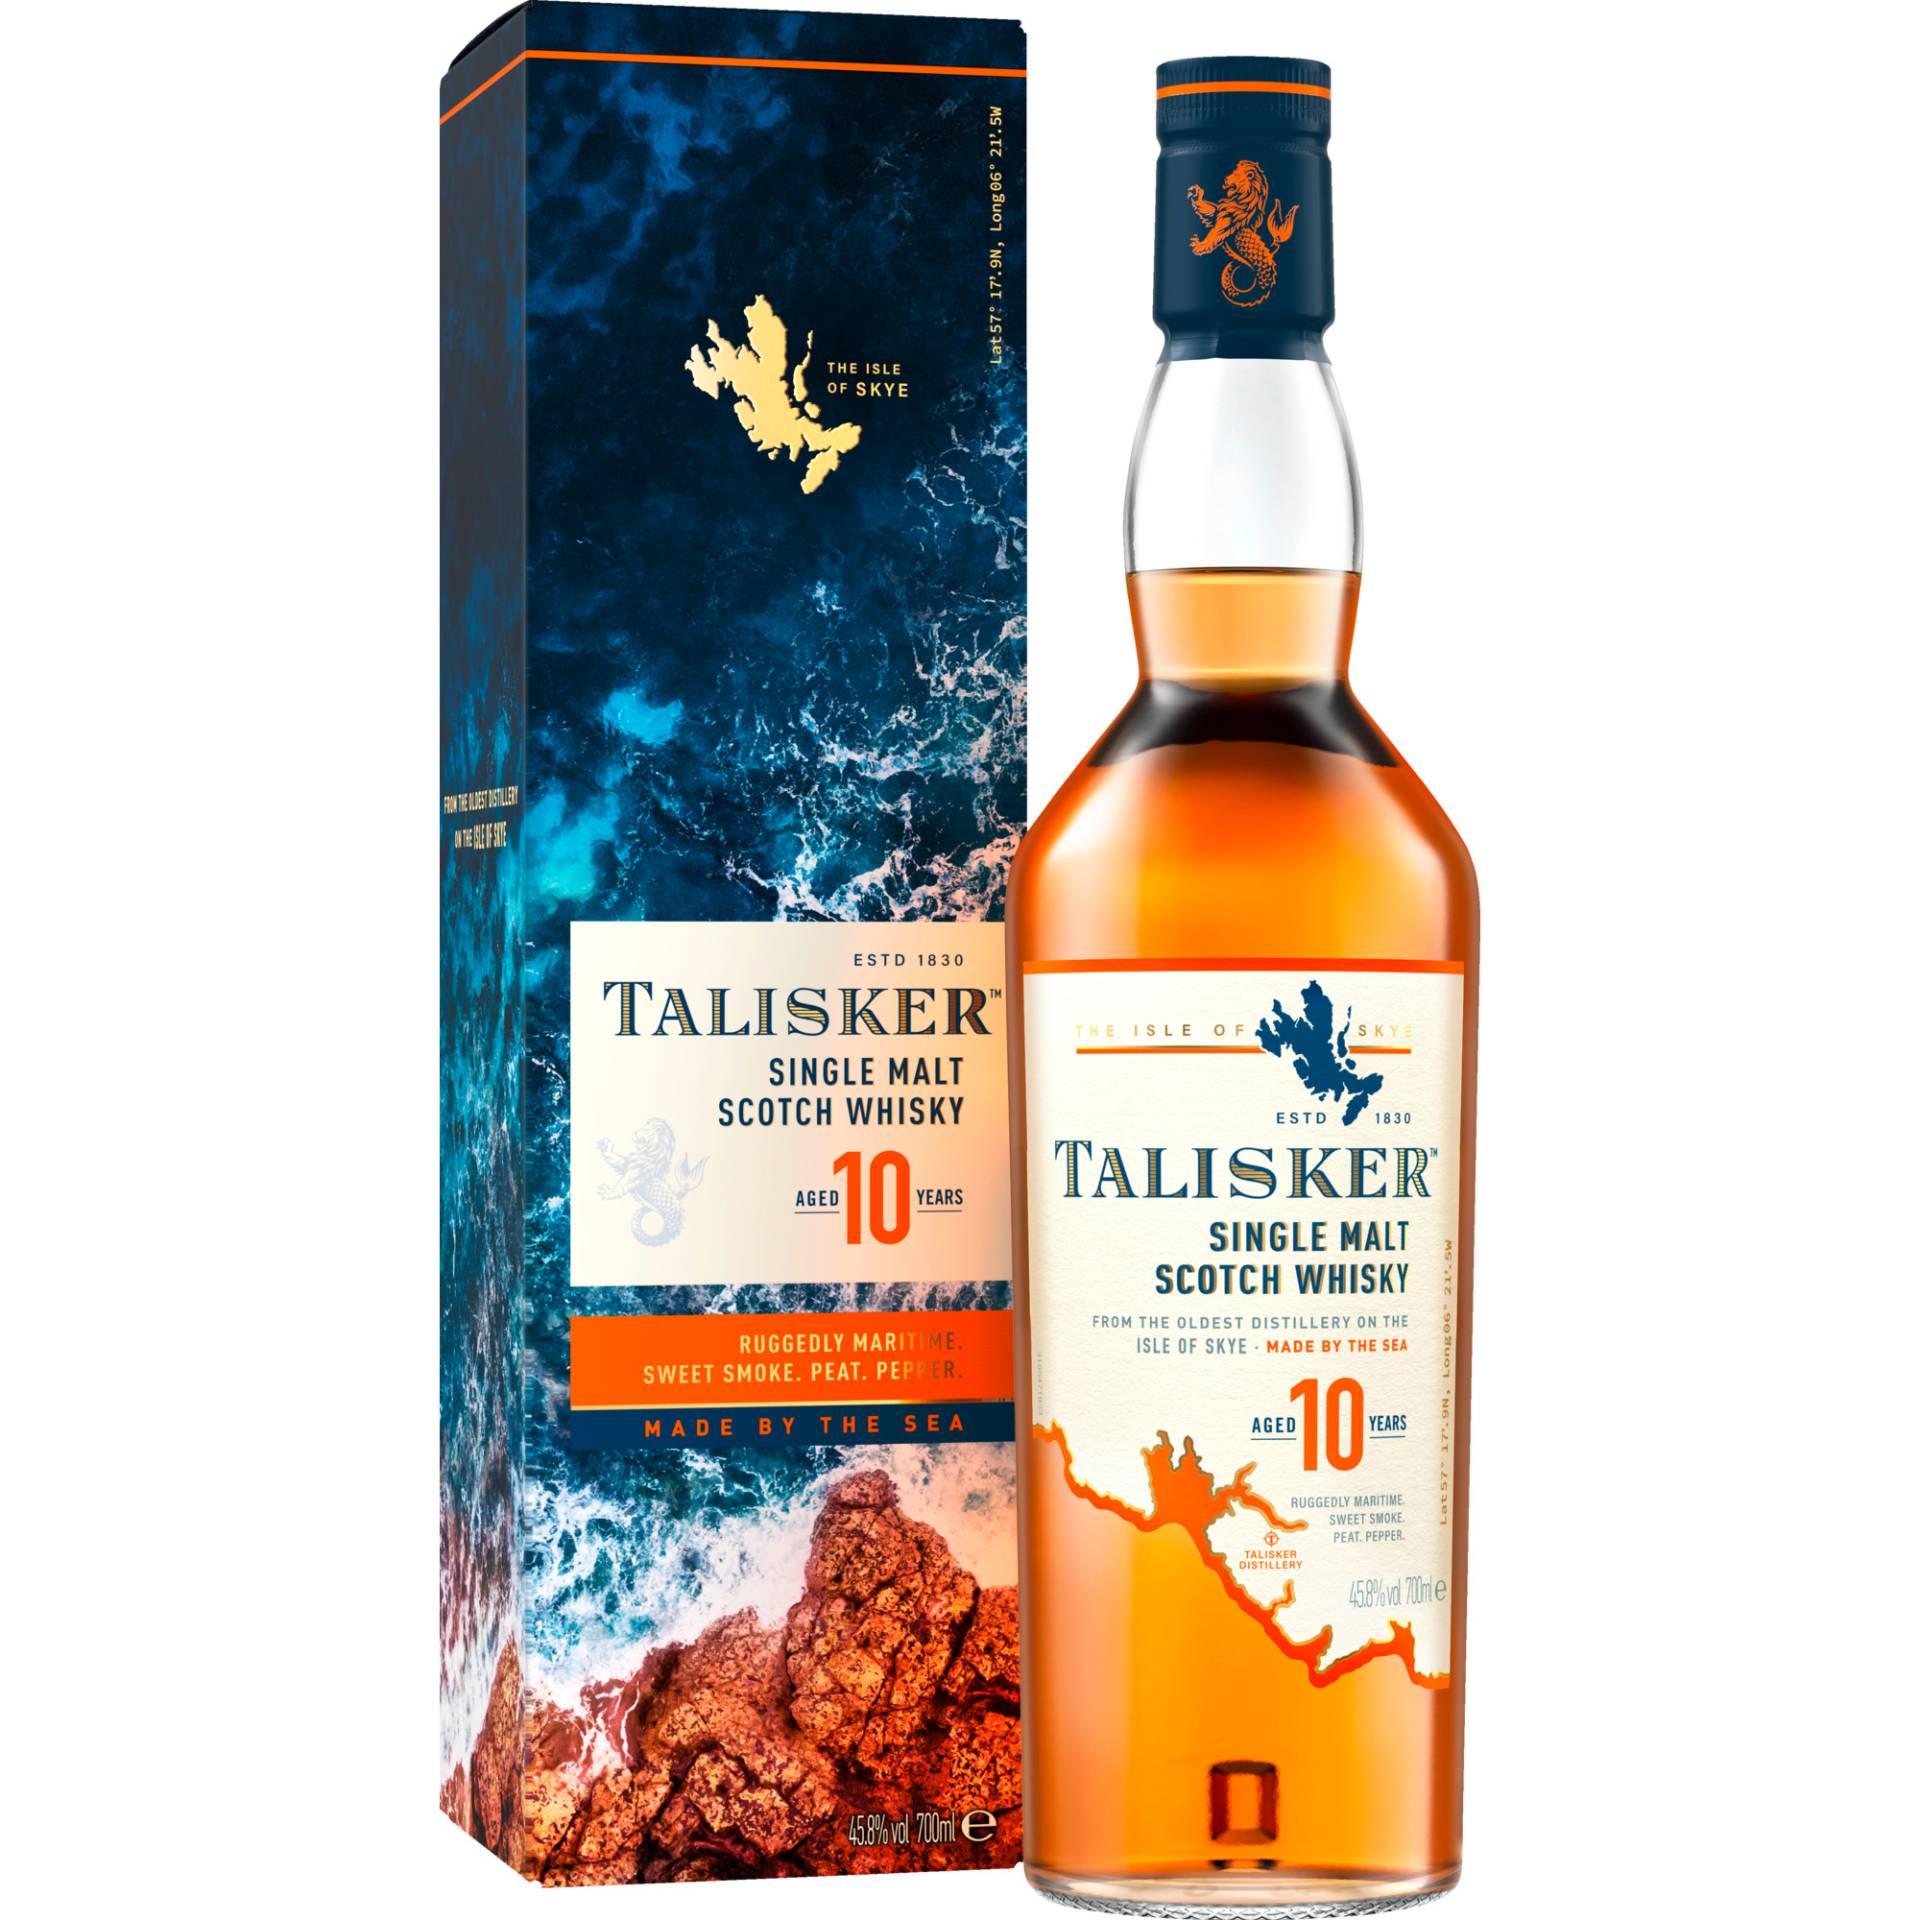 Talisker 10 Years Isle of Skye Single Malt Whisky, Scotch, 0,7 L, 45,8% Vol., Schottland, Spirituosen von Talisker Distillery, Carbost, Isle of Skye, IV47 8 SR, Scotland